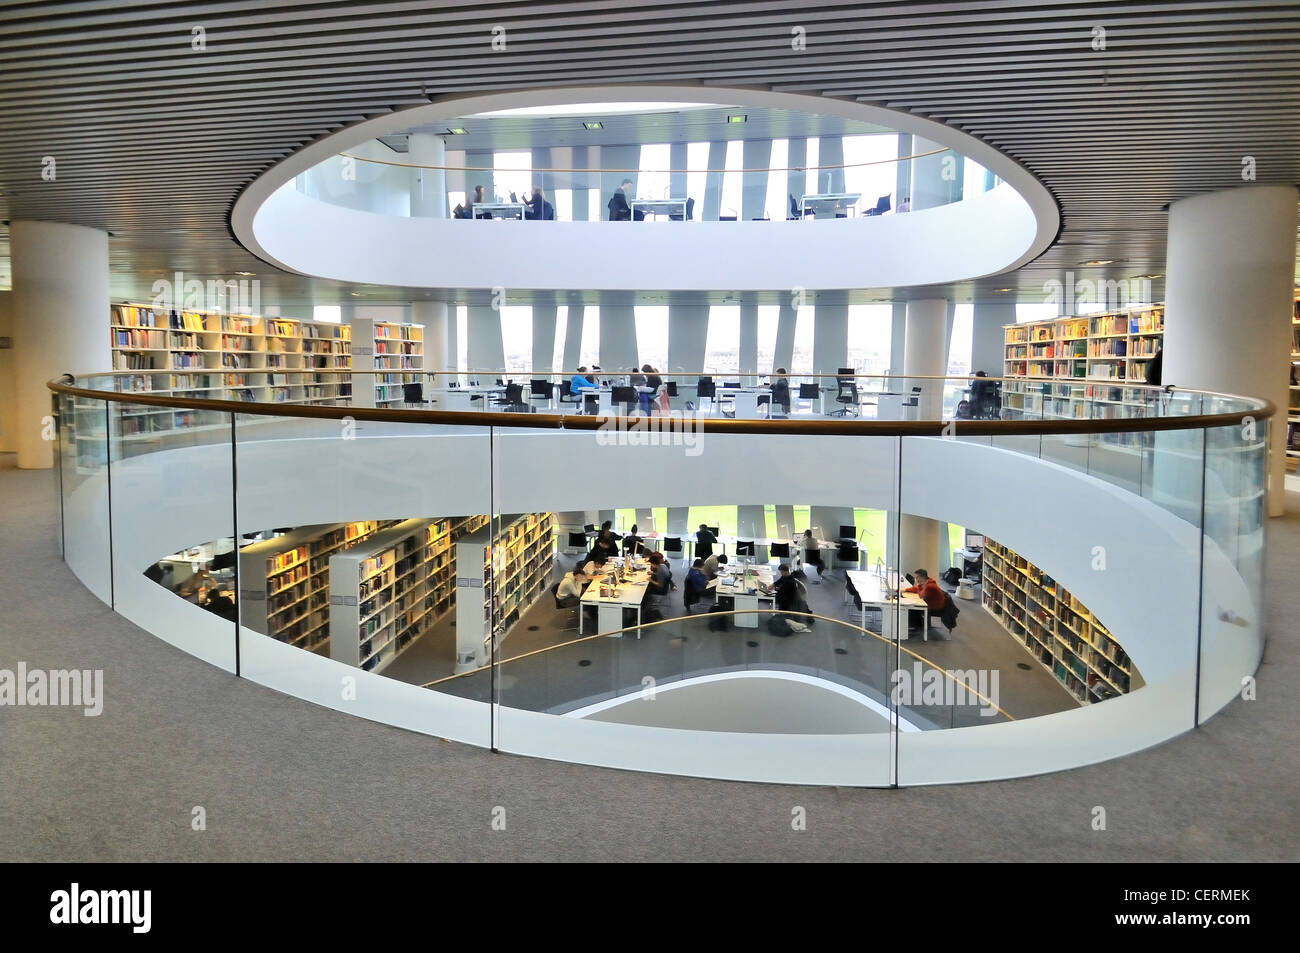 university of aberdeen library